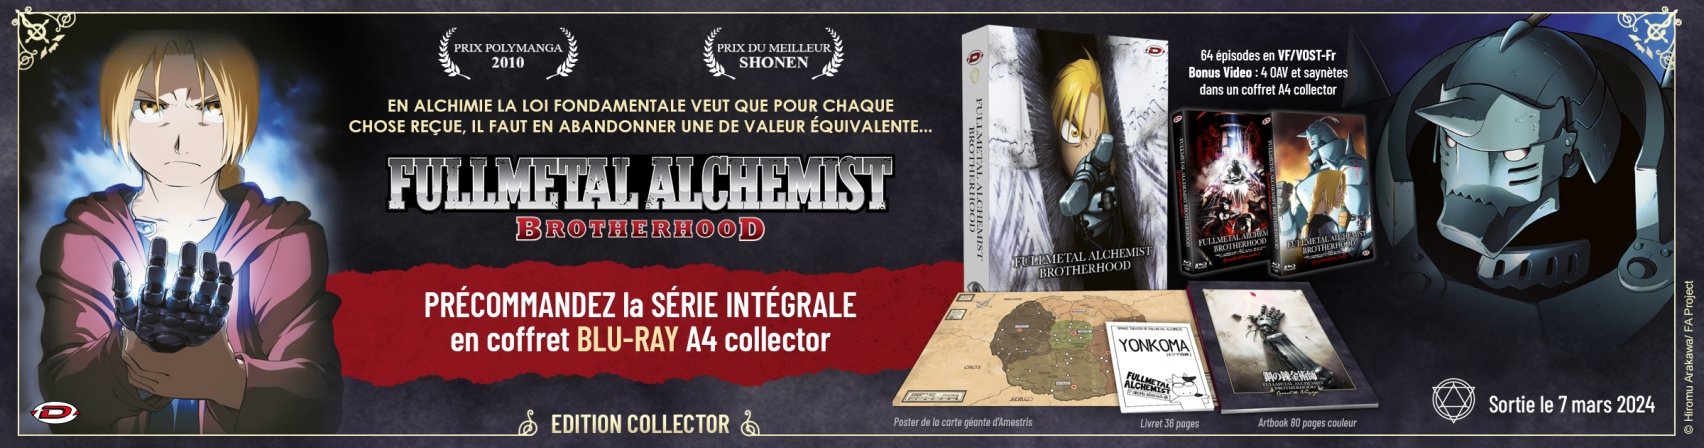 Précommandez Fullmetal Alchemist Brotherhood en coffret Blu-ray collector